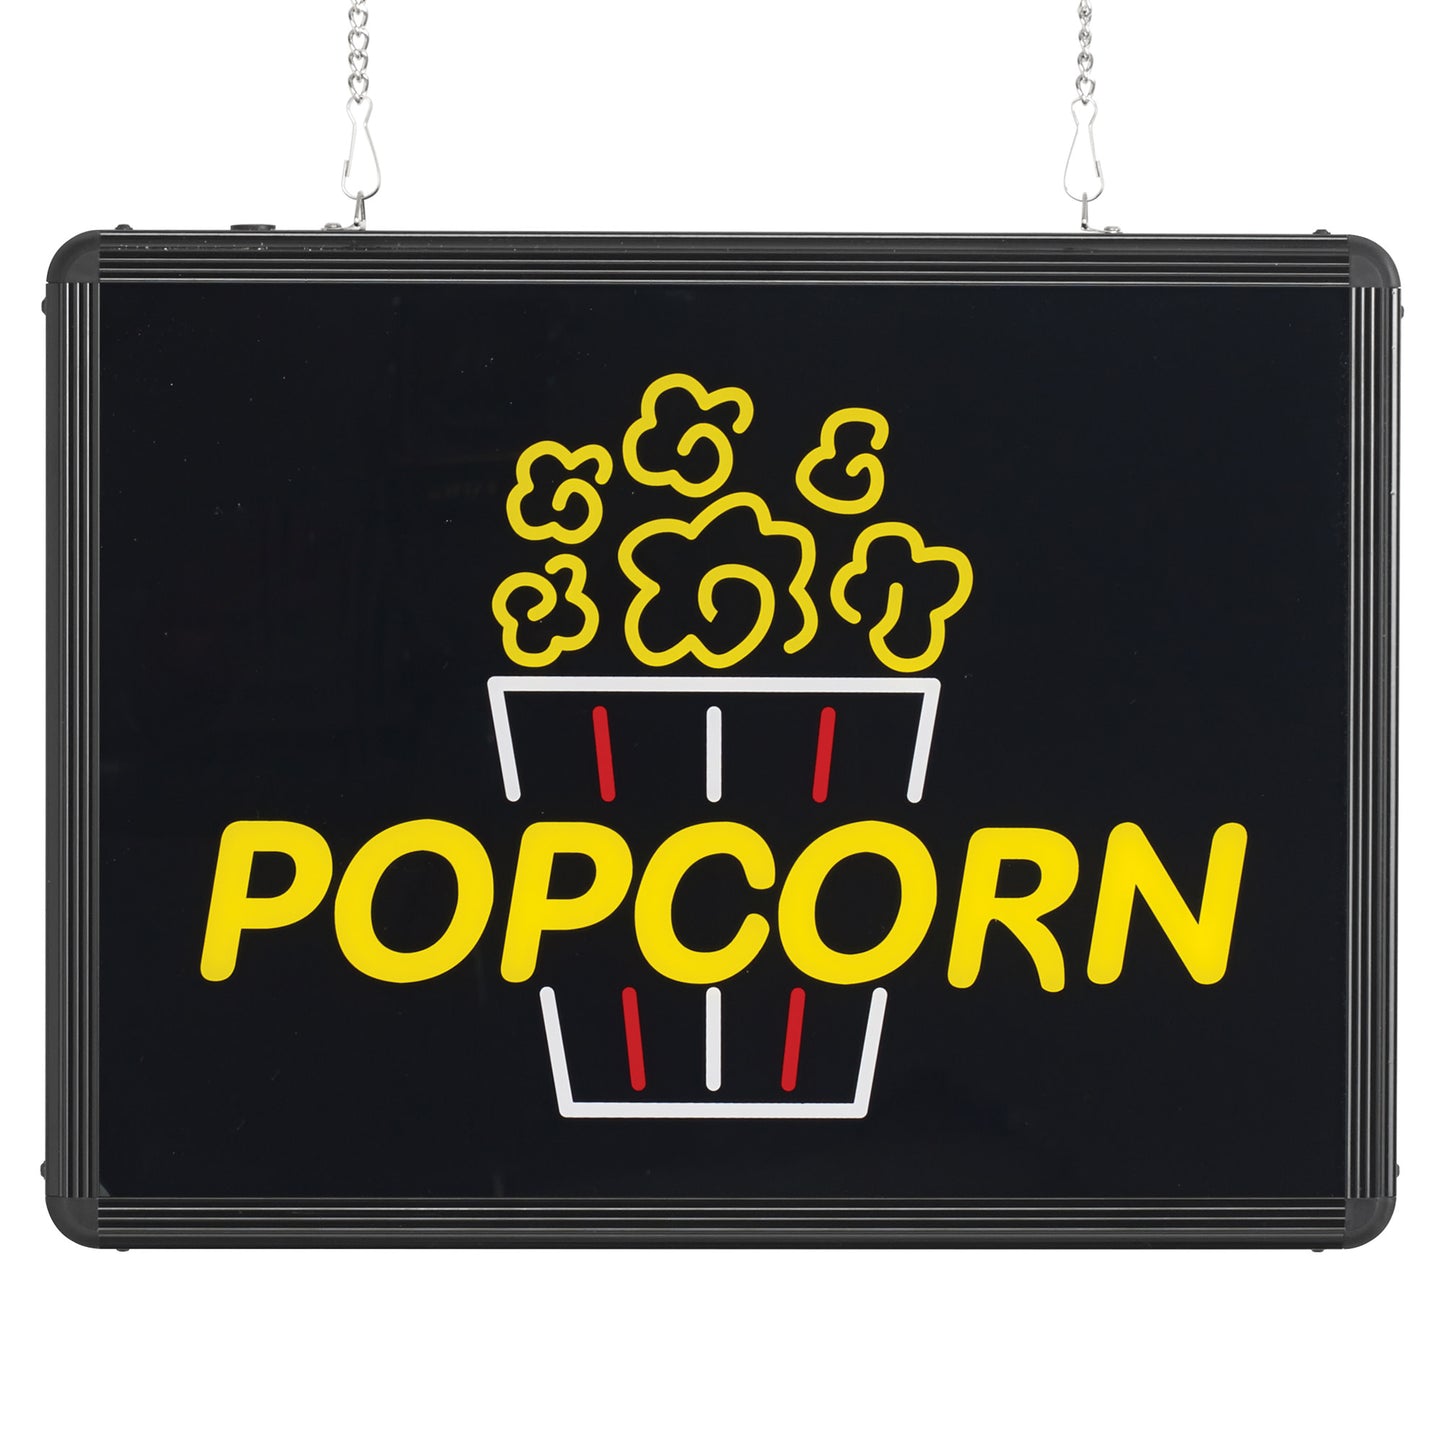 92001 - BenchmarkUSA Ultra-Bright Sign - Popcorn